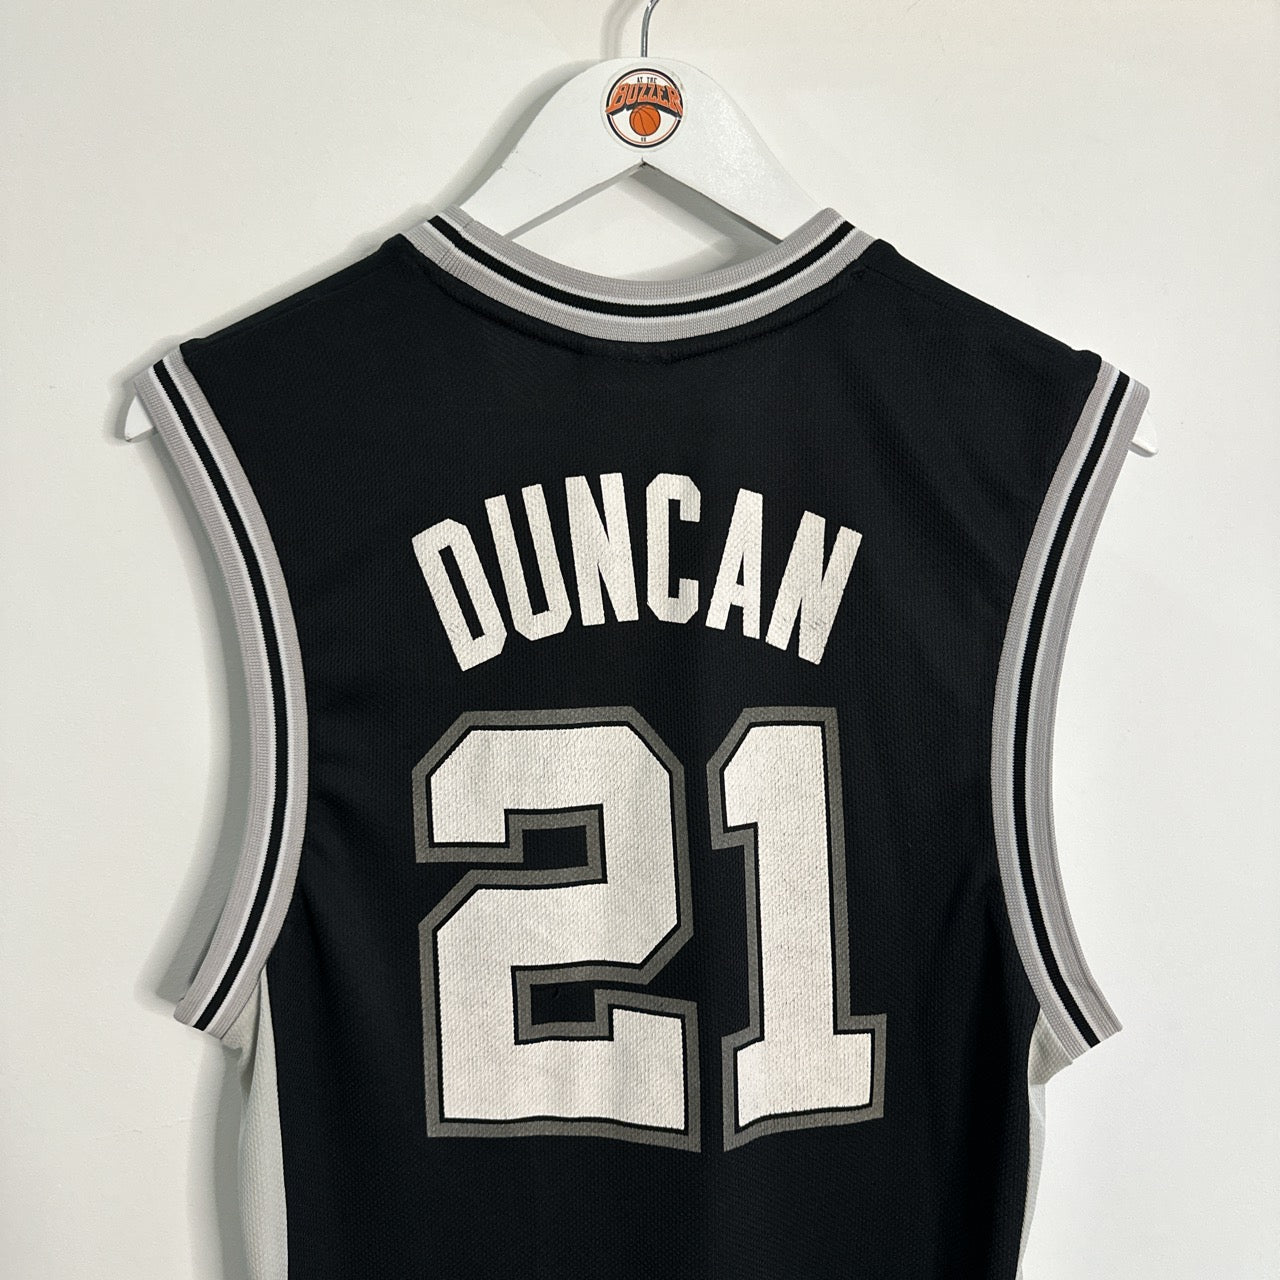 San Antonio Spurs Tim Duncan Adidas jersey - Small